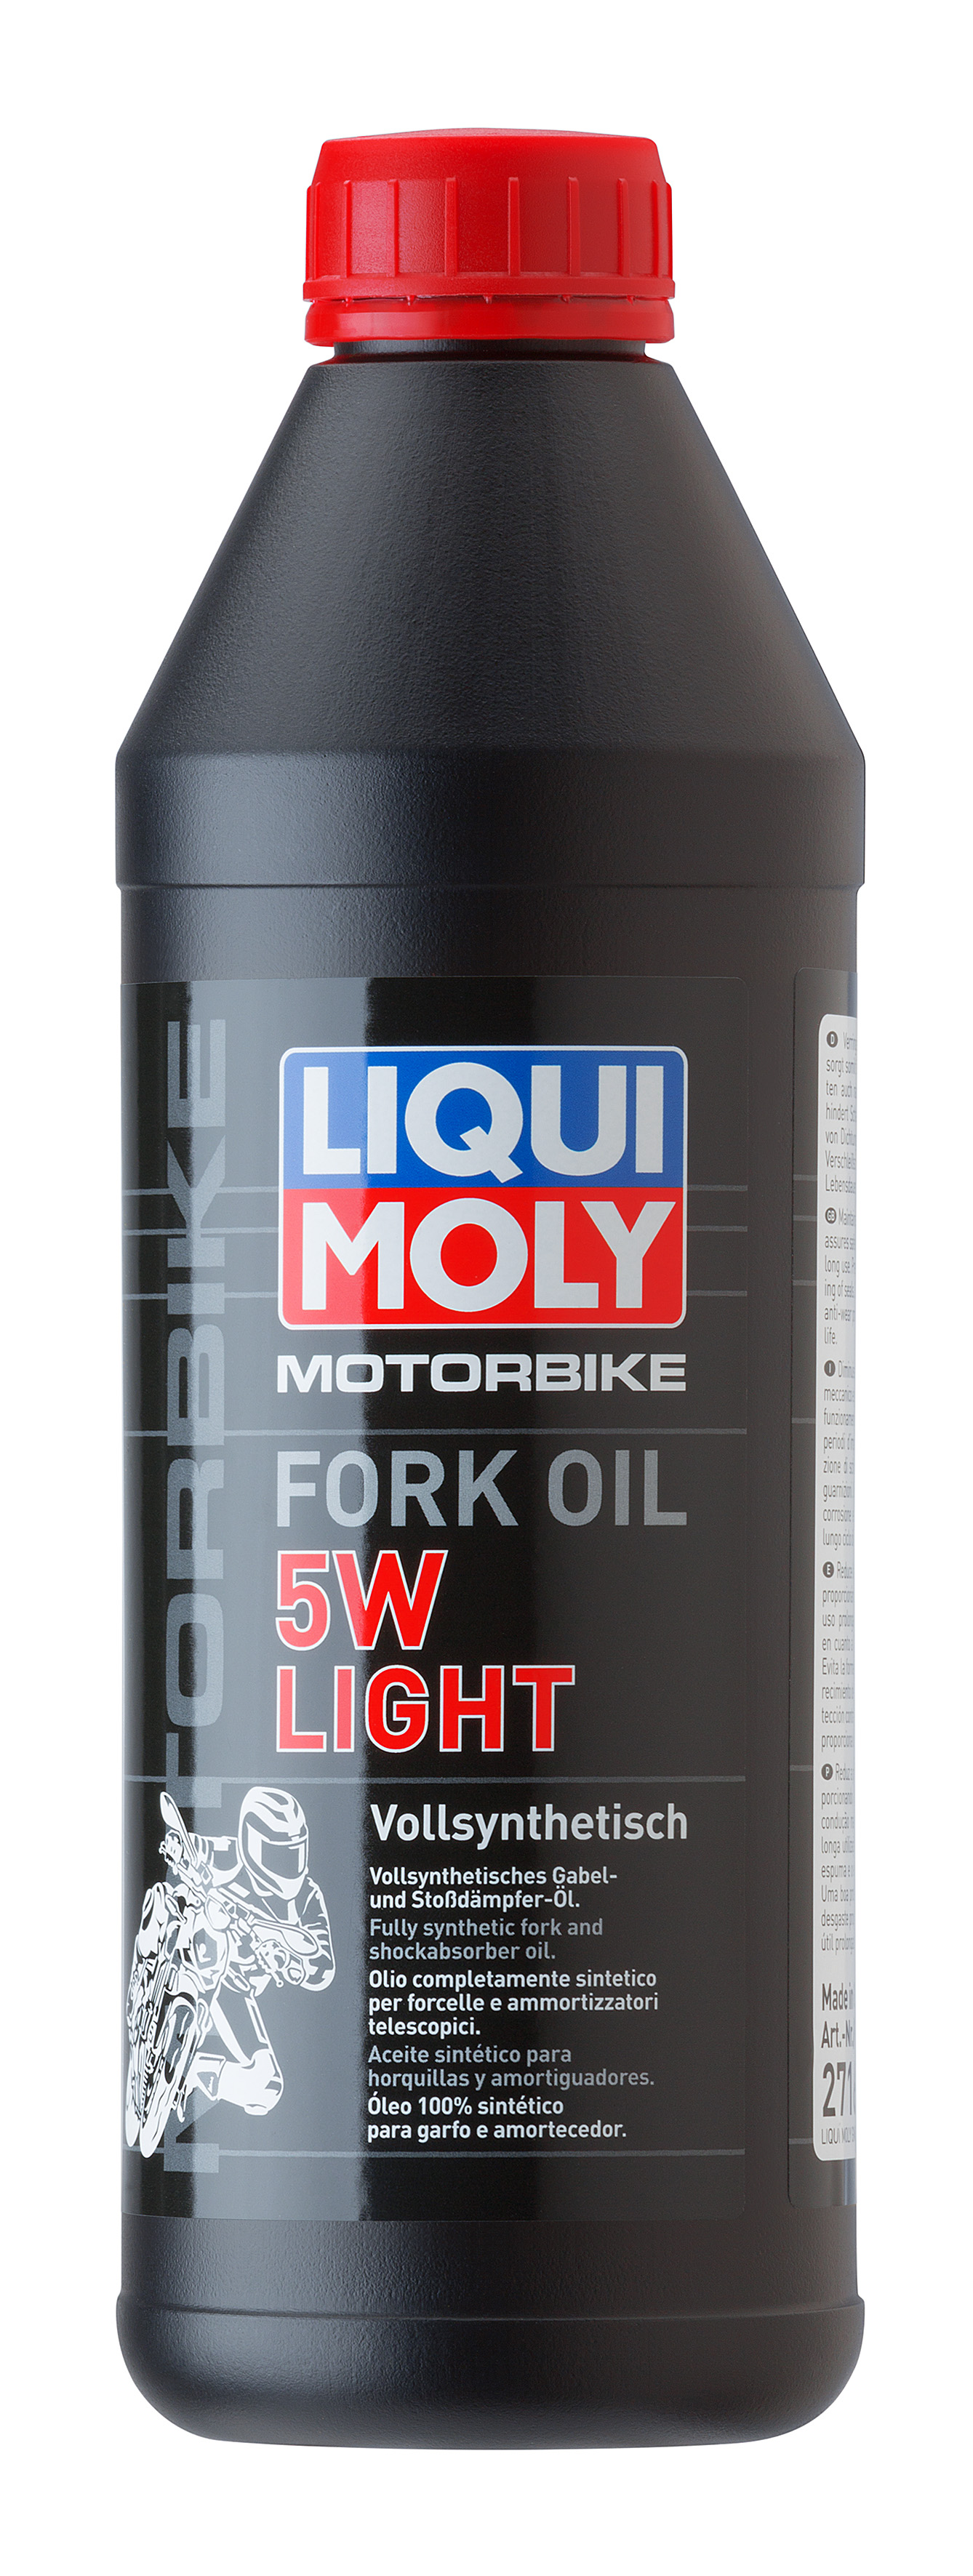 Масло синтетическое д/вилок и амортиз. motorbike fork oil light 5w 1л - Liqui Moly 2716